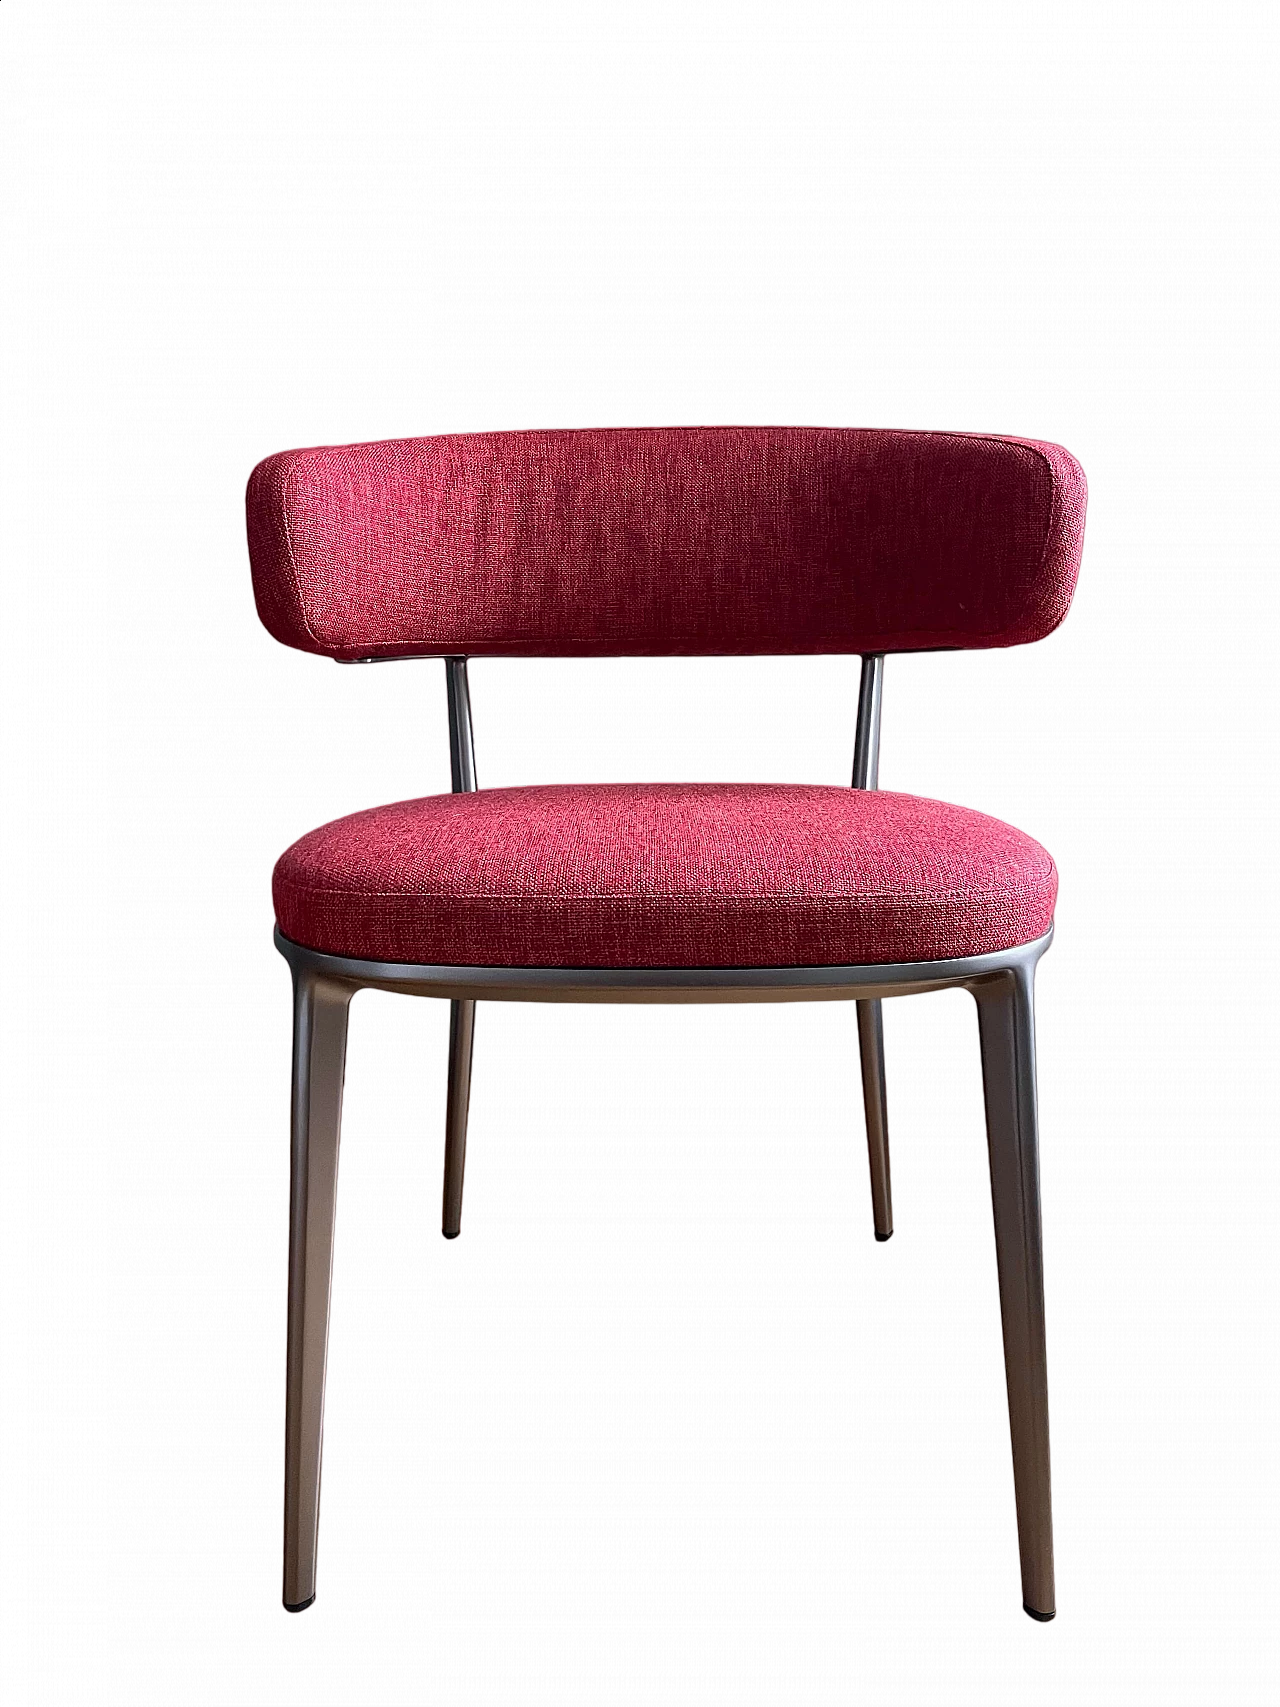 Caratos chair in aluminium and red fabric by Antonio Citterio for Maxalto, 2000s 11